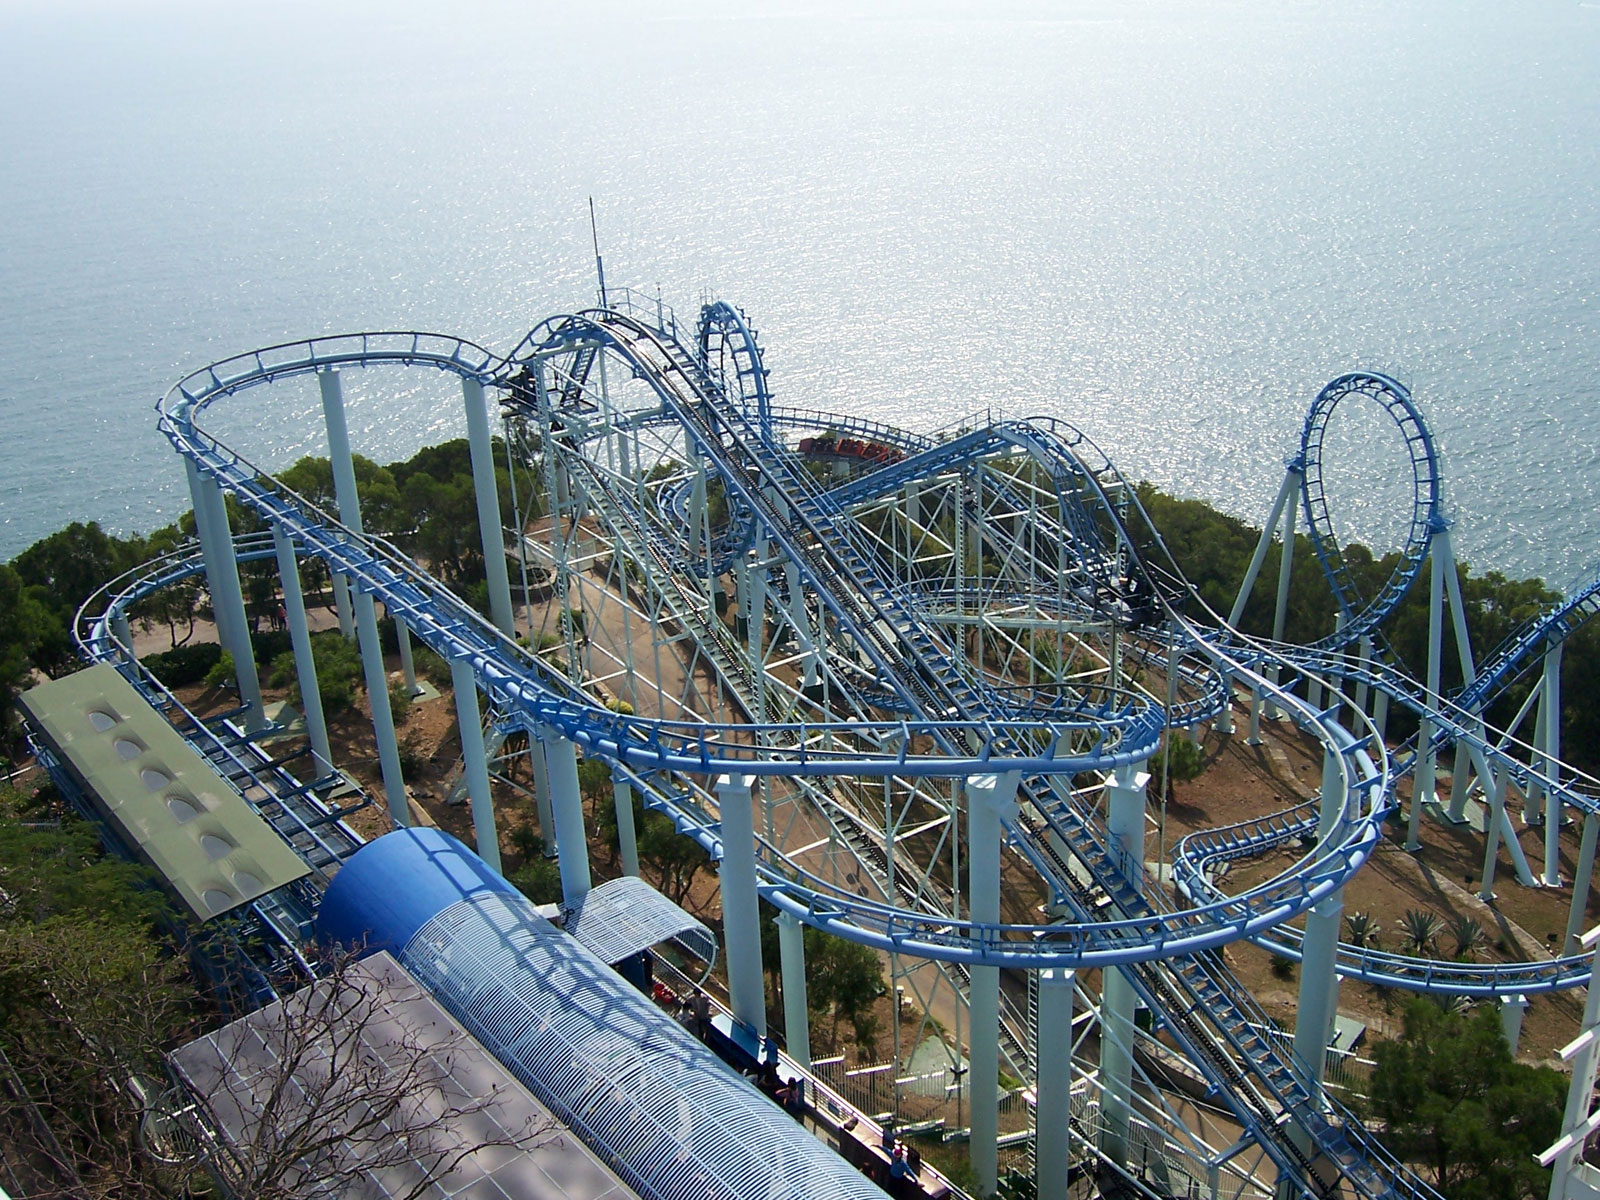 Ocean_Park_Dragon_rollercoaster.jpg